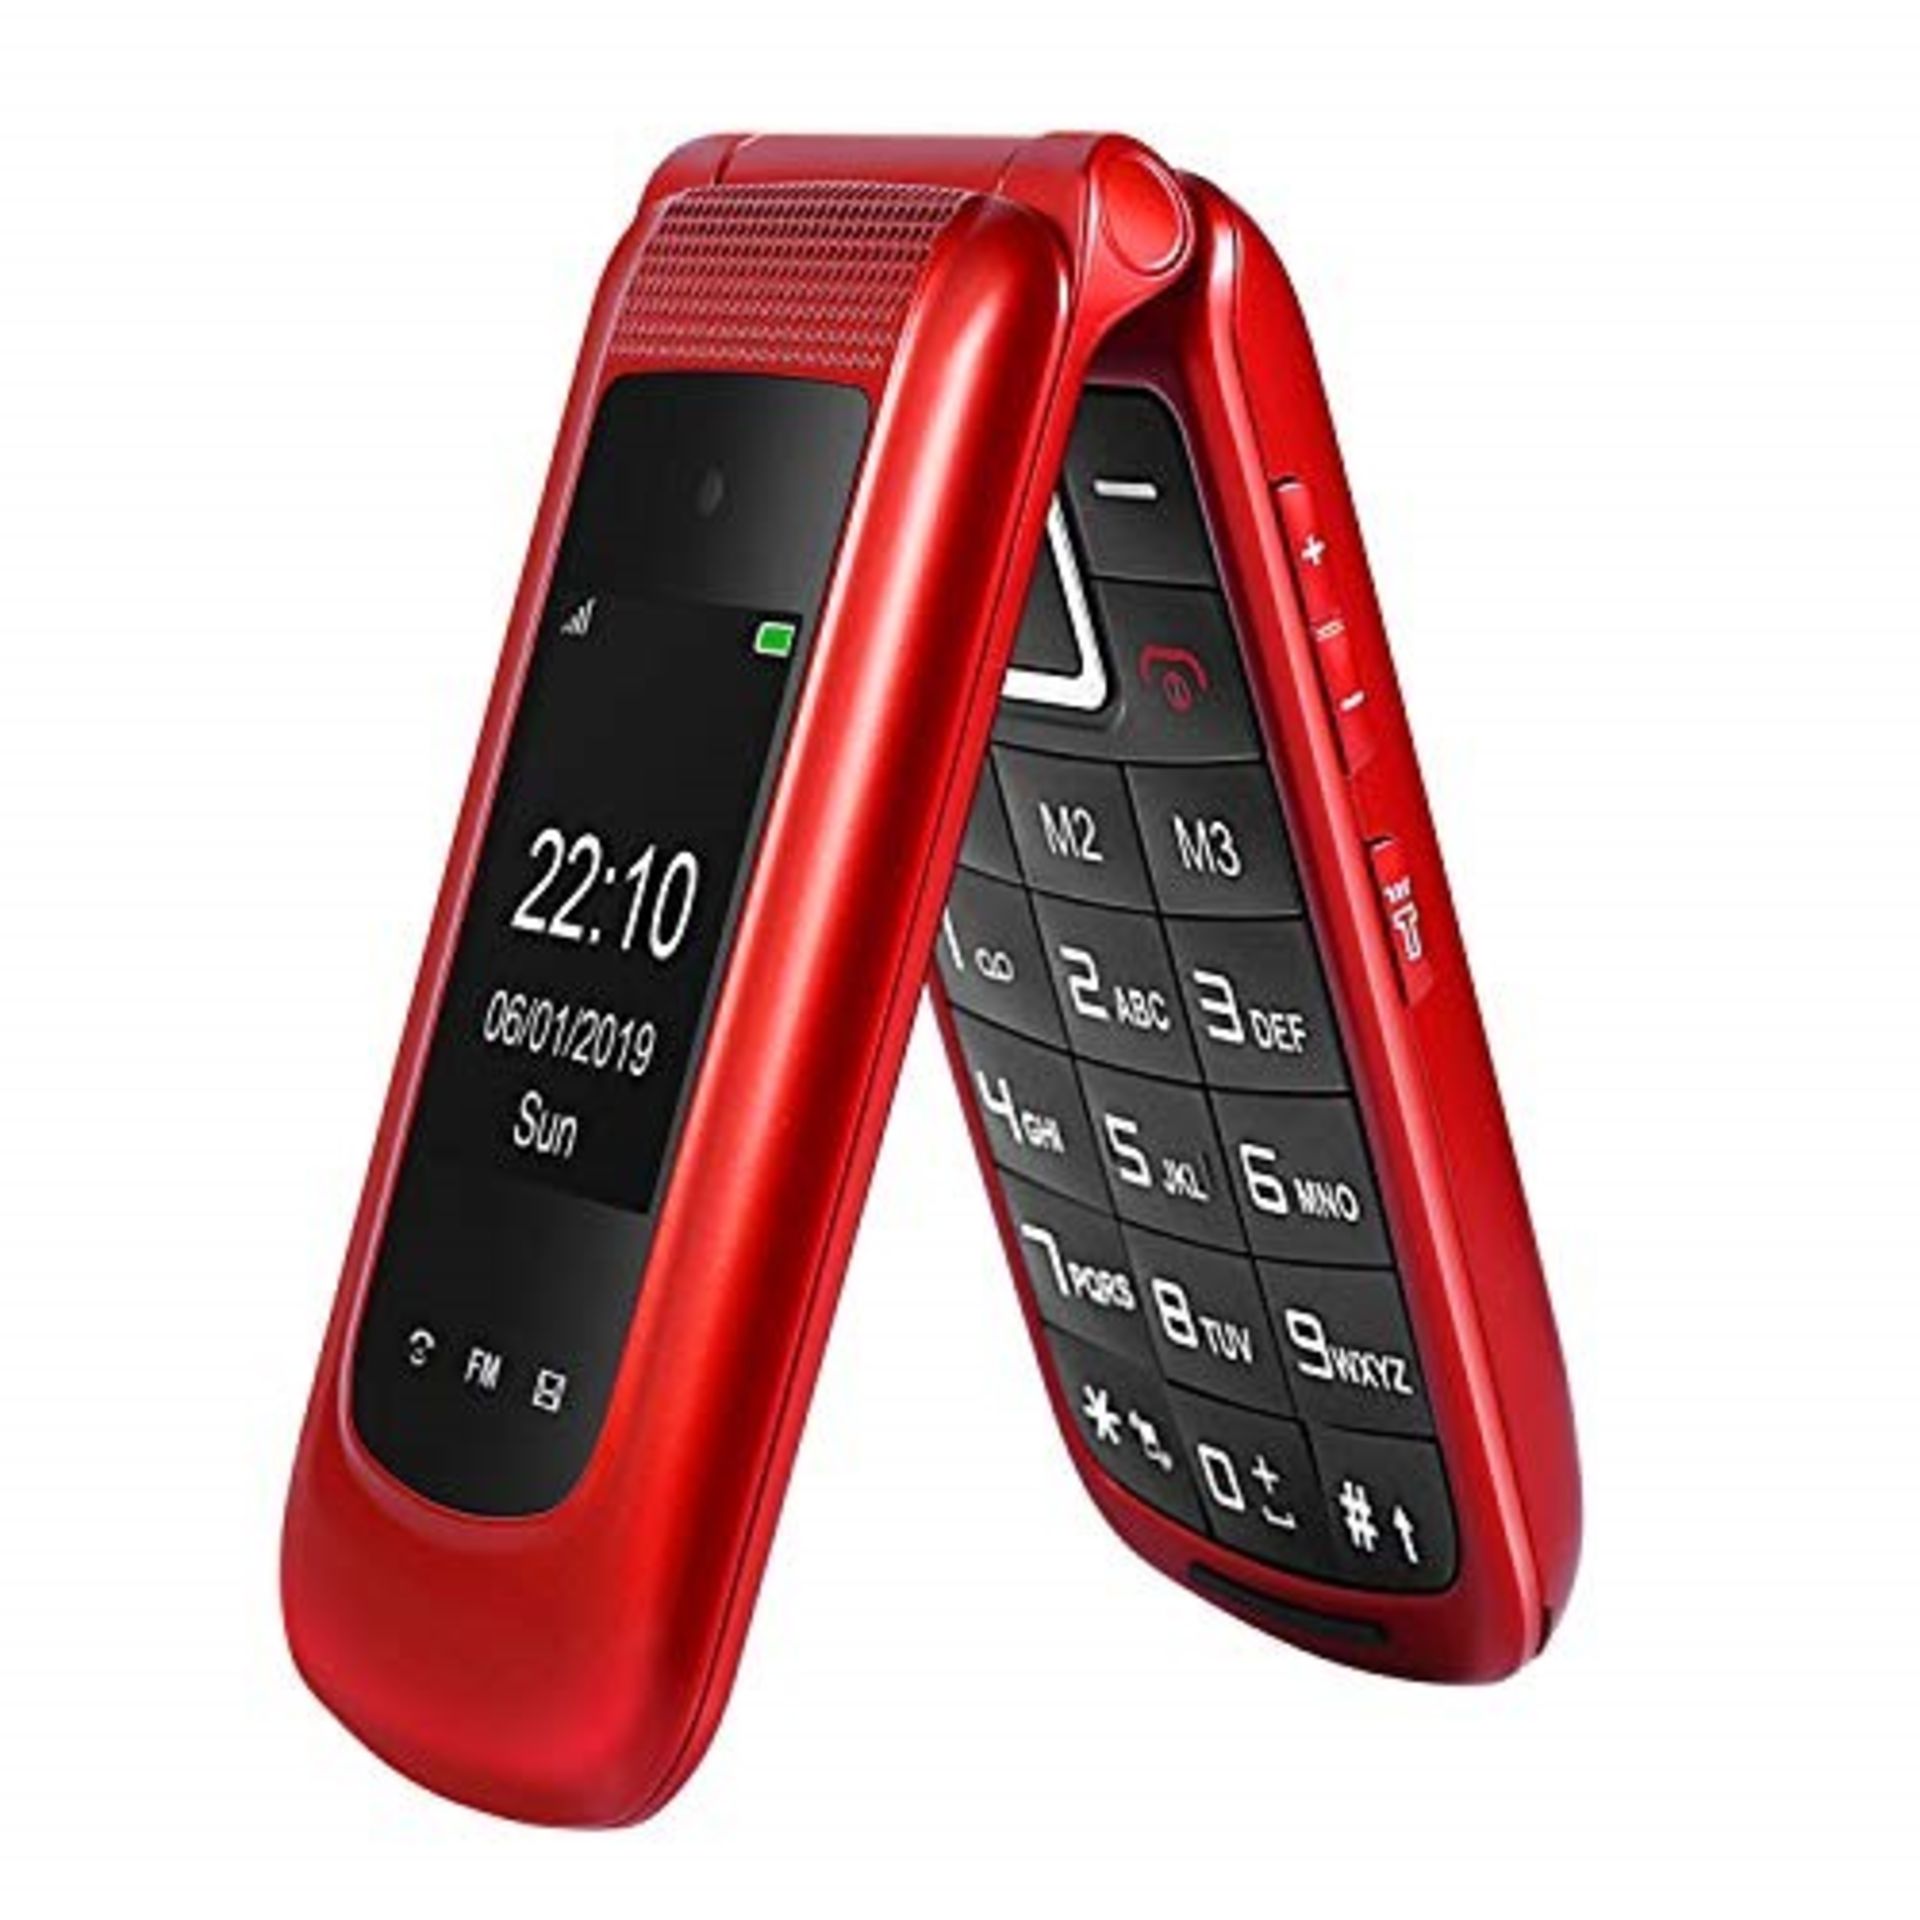 Big Button Mobile Phone for Elderly Sim Free Flip Phone Unlocked Basic Mobile Phone wi